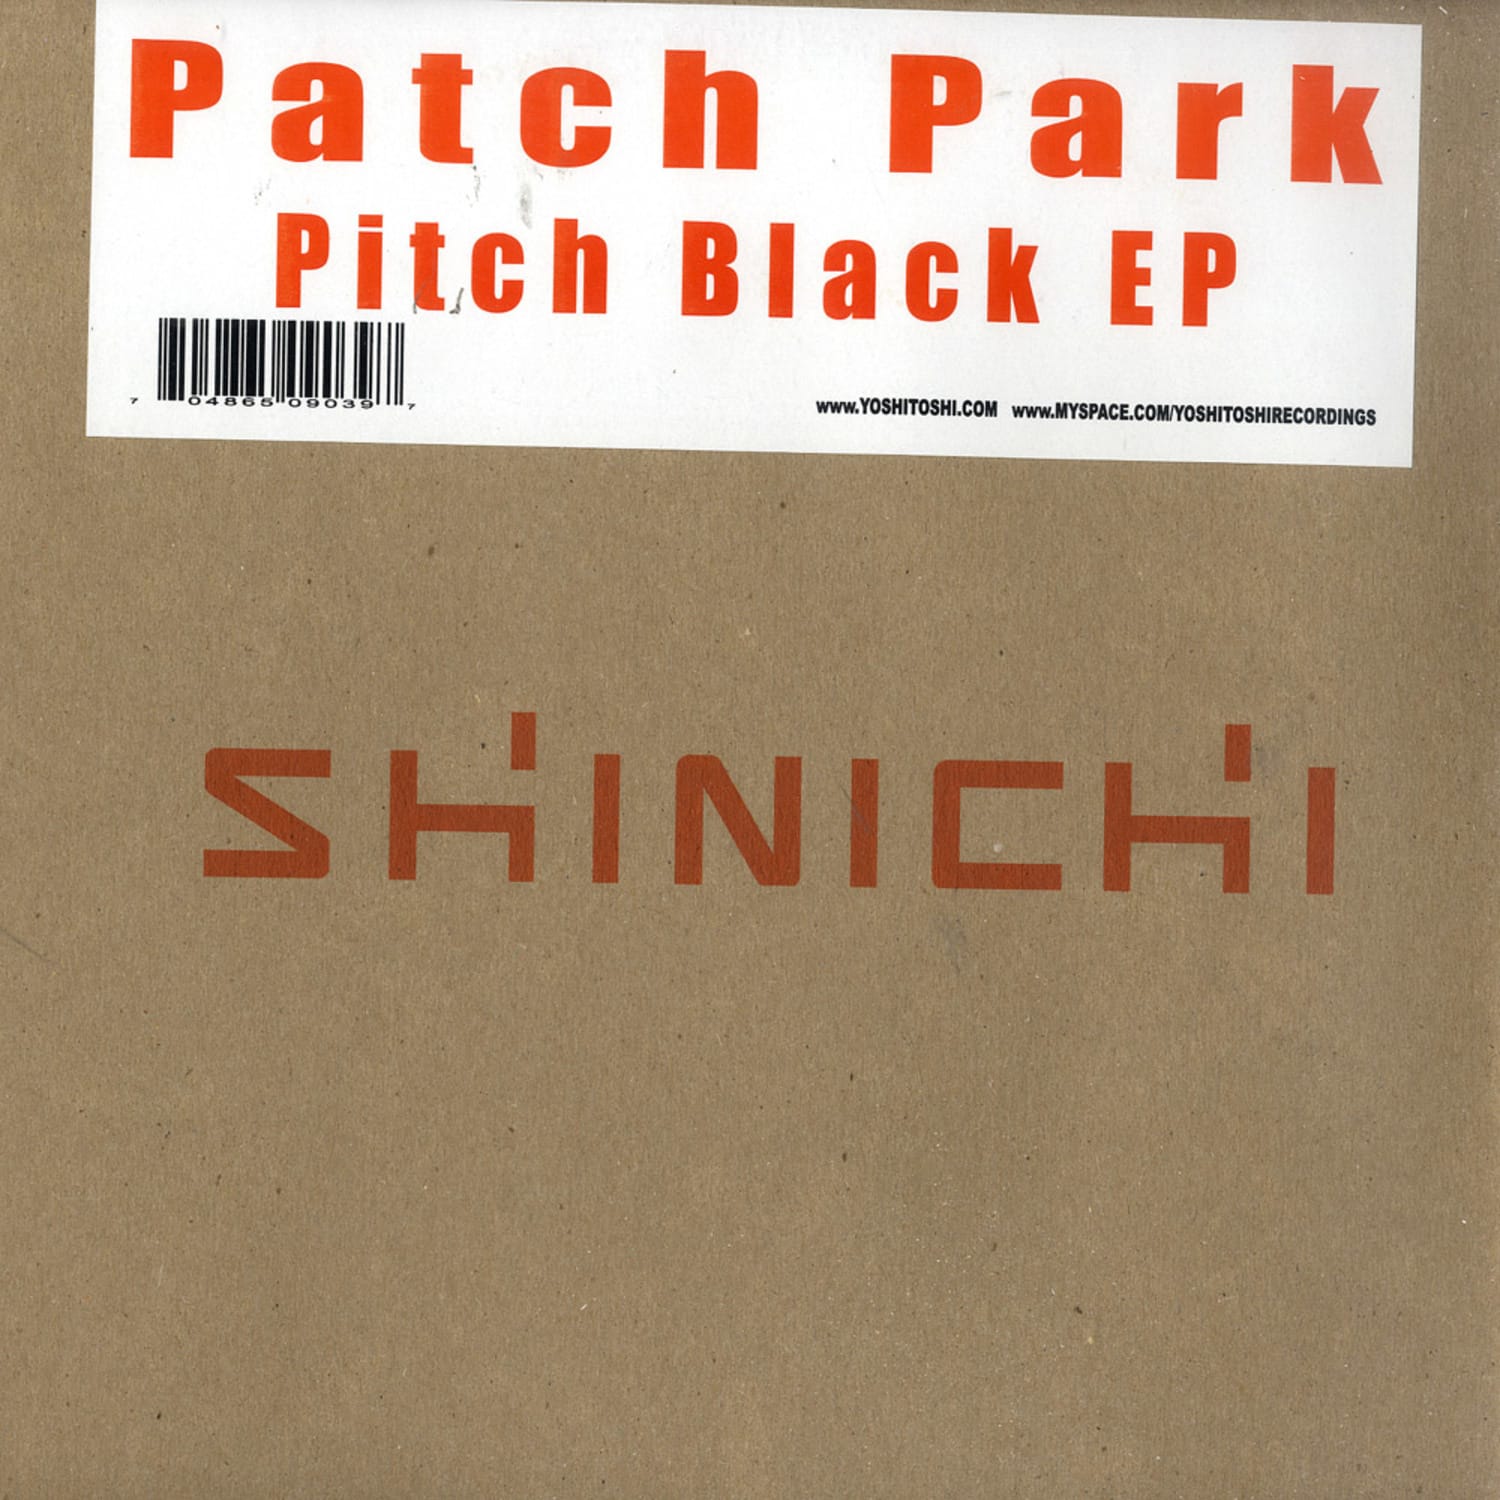 Patch Park - PITCH BLACK EP